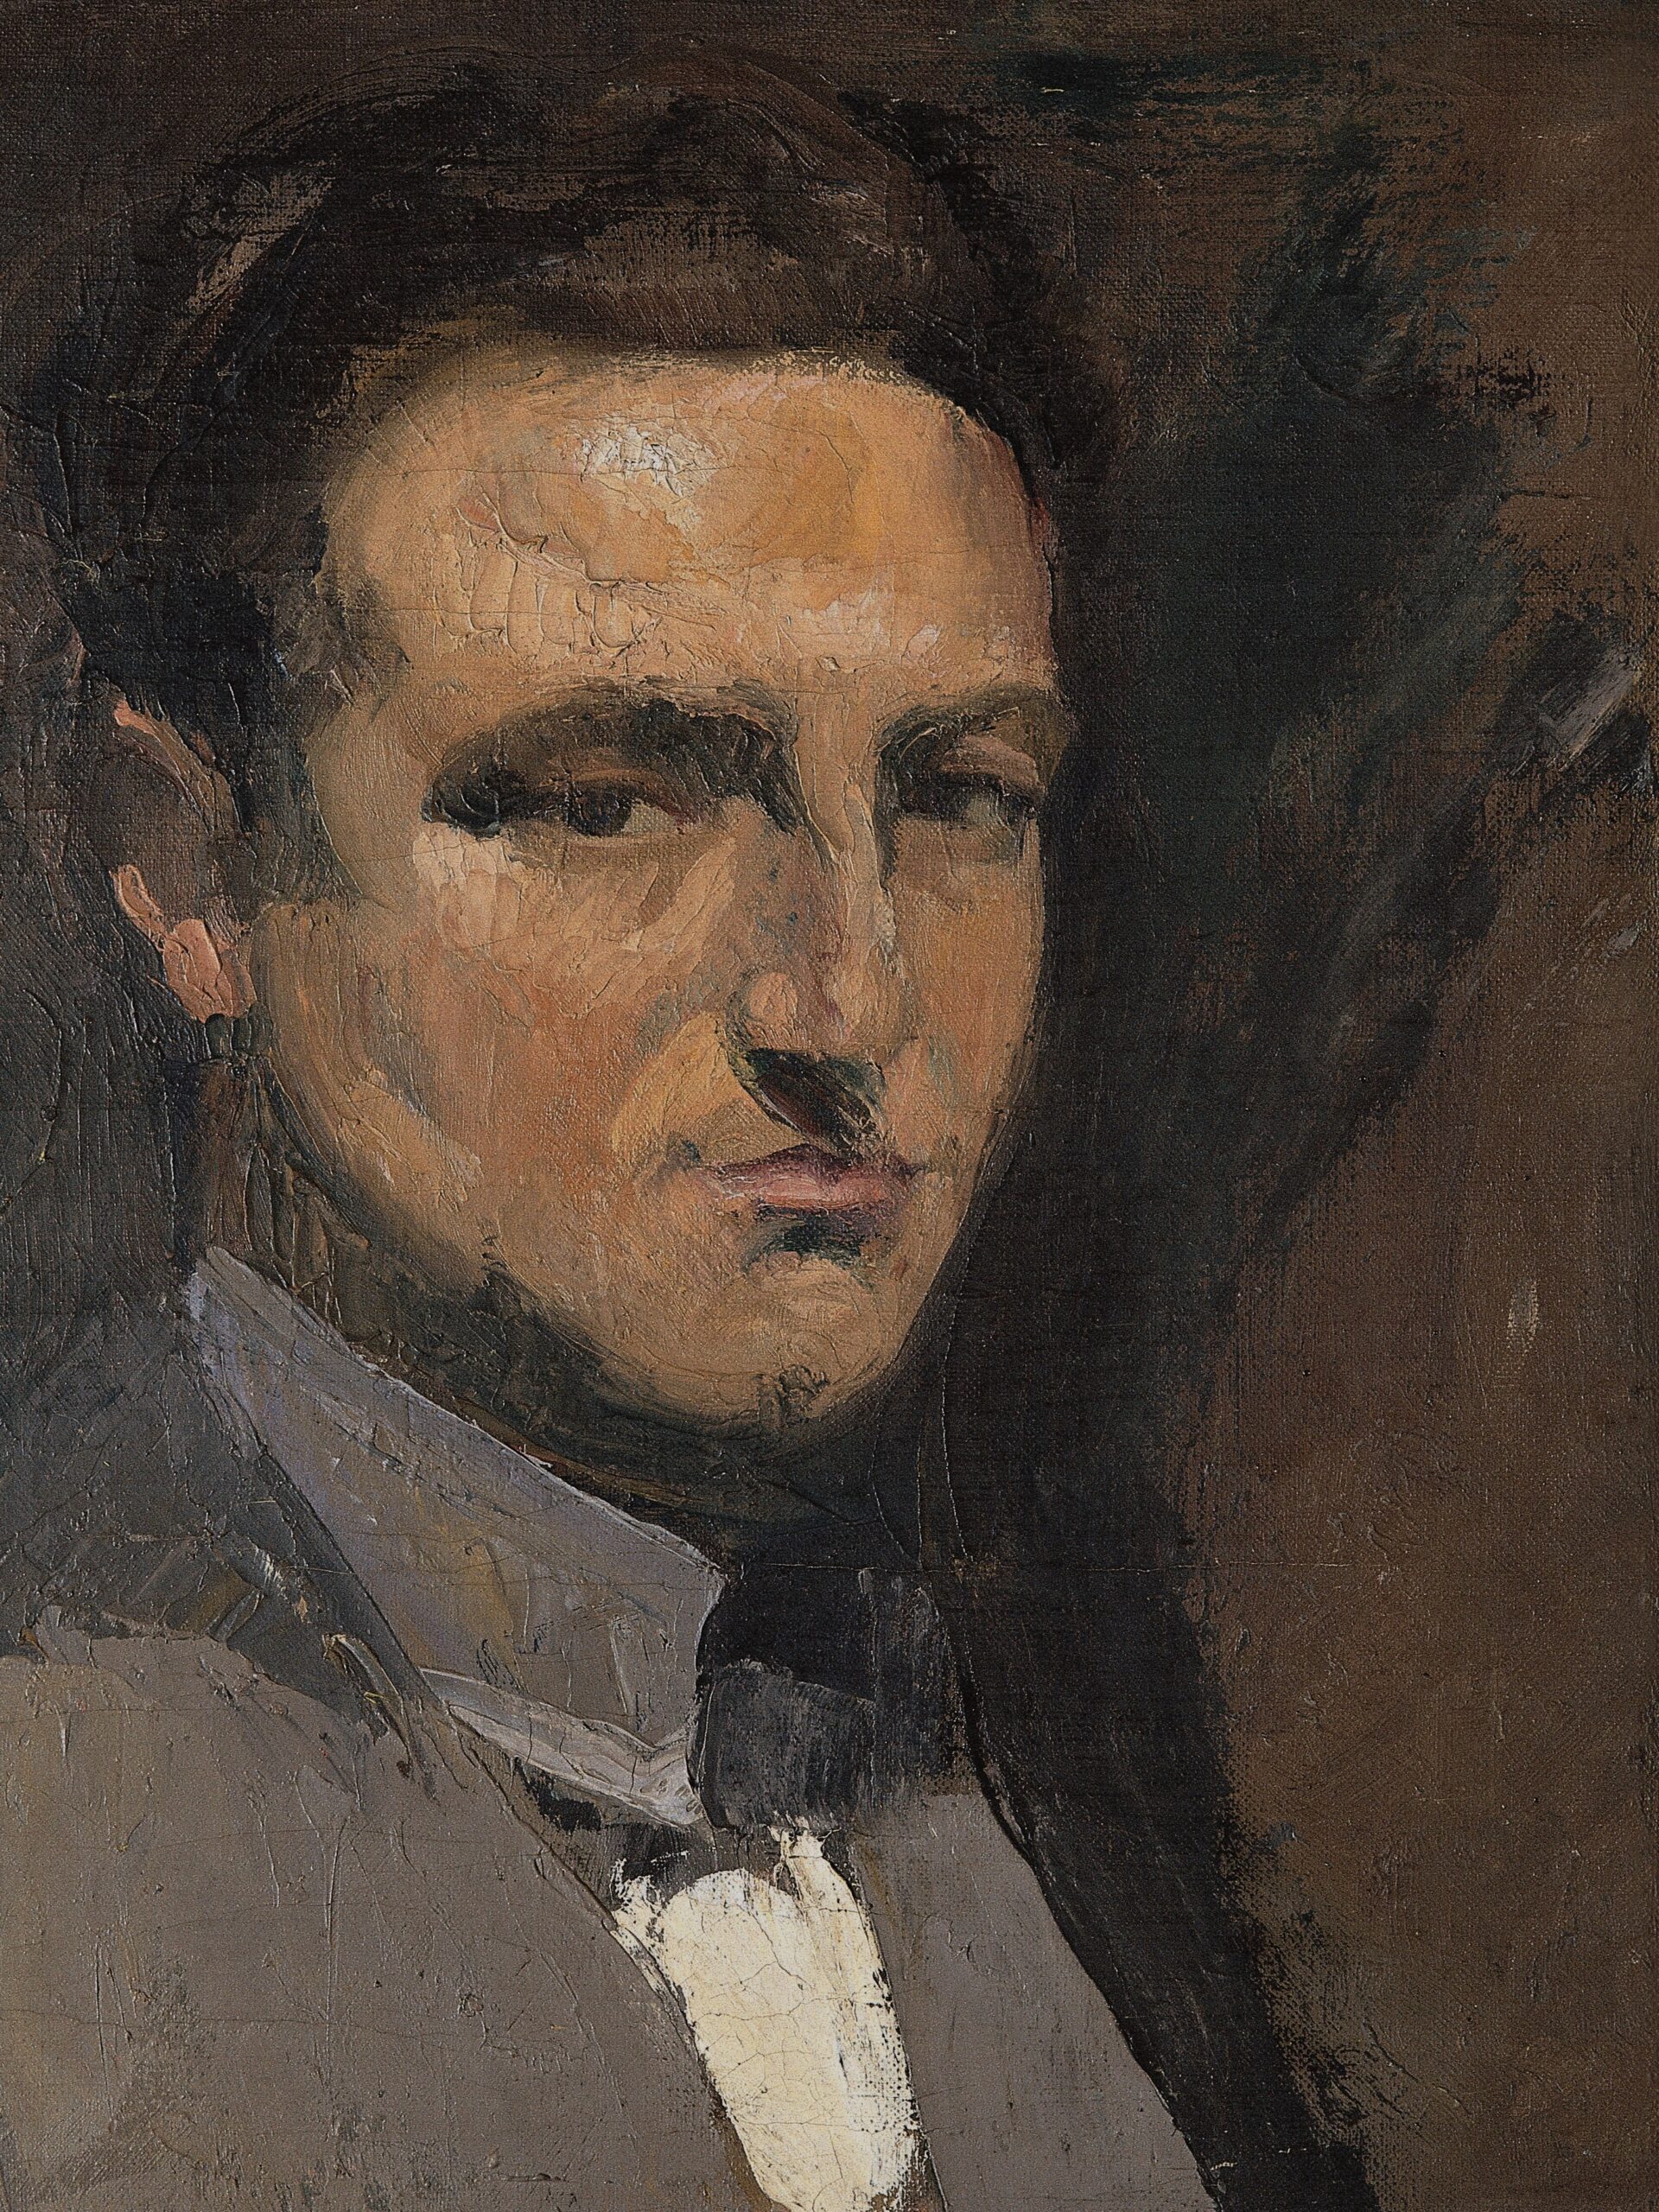 Pintura de José Manaut titulada Autorretrato, 1918 aprox. Óleo sobre lienzo.